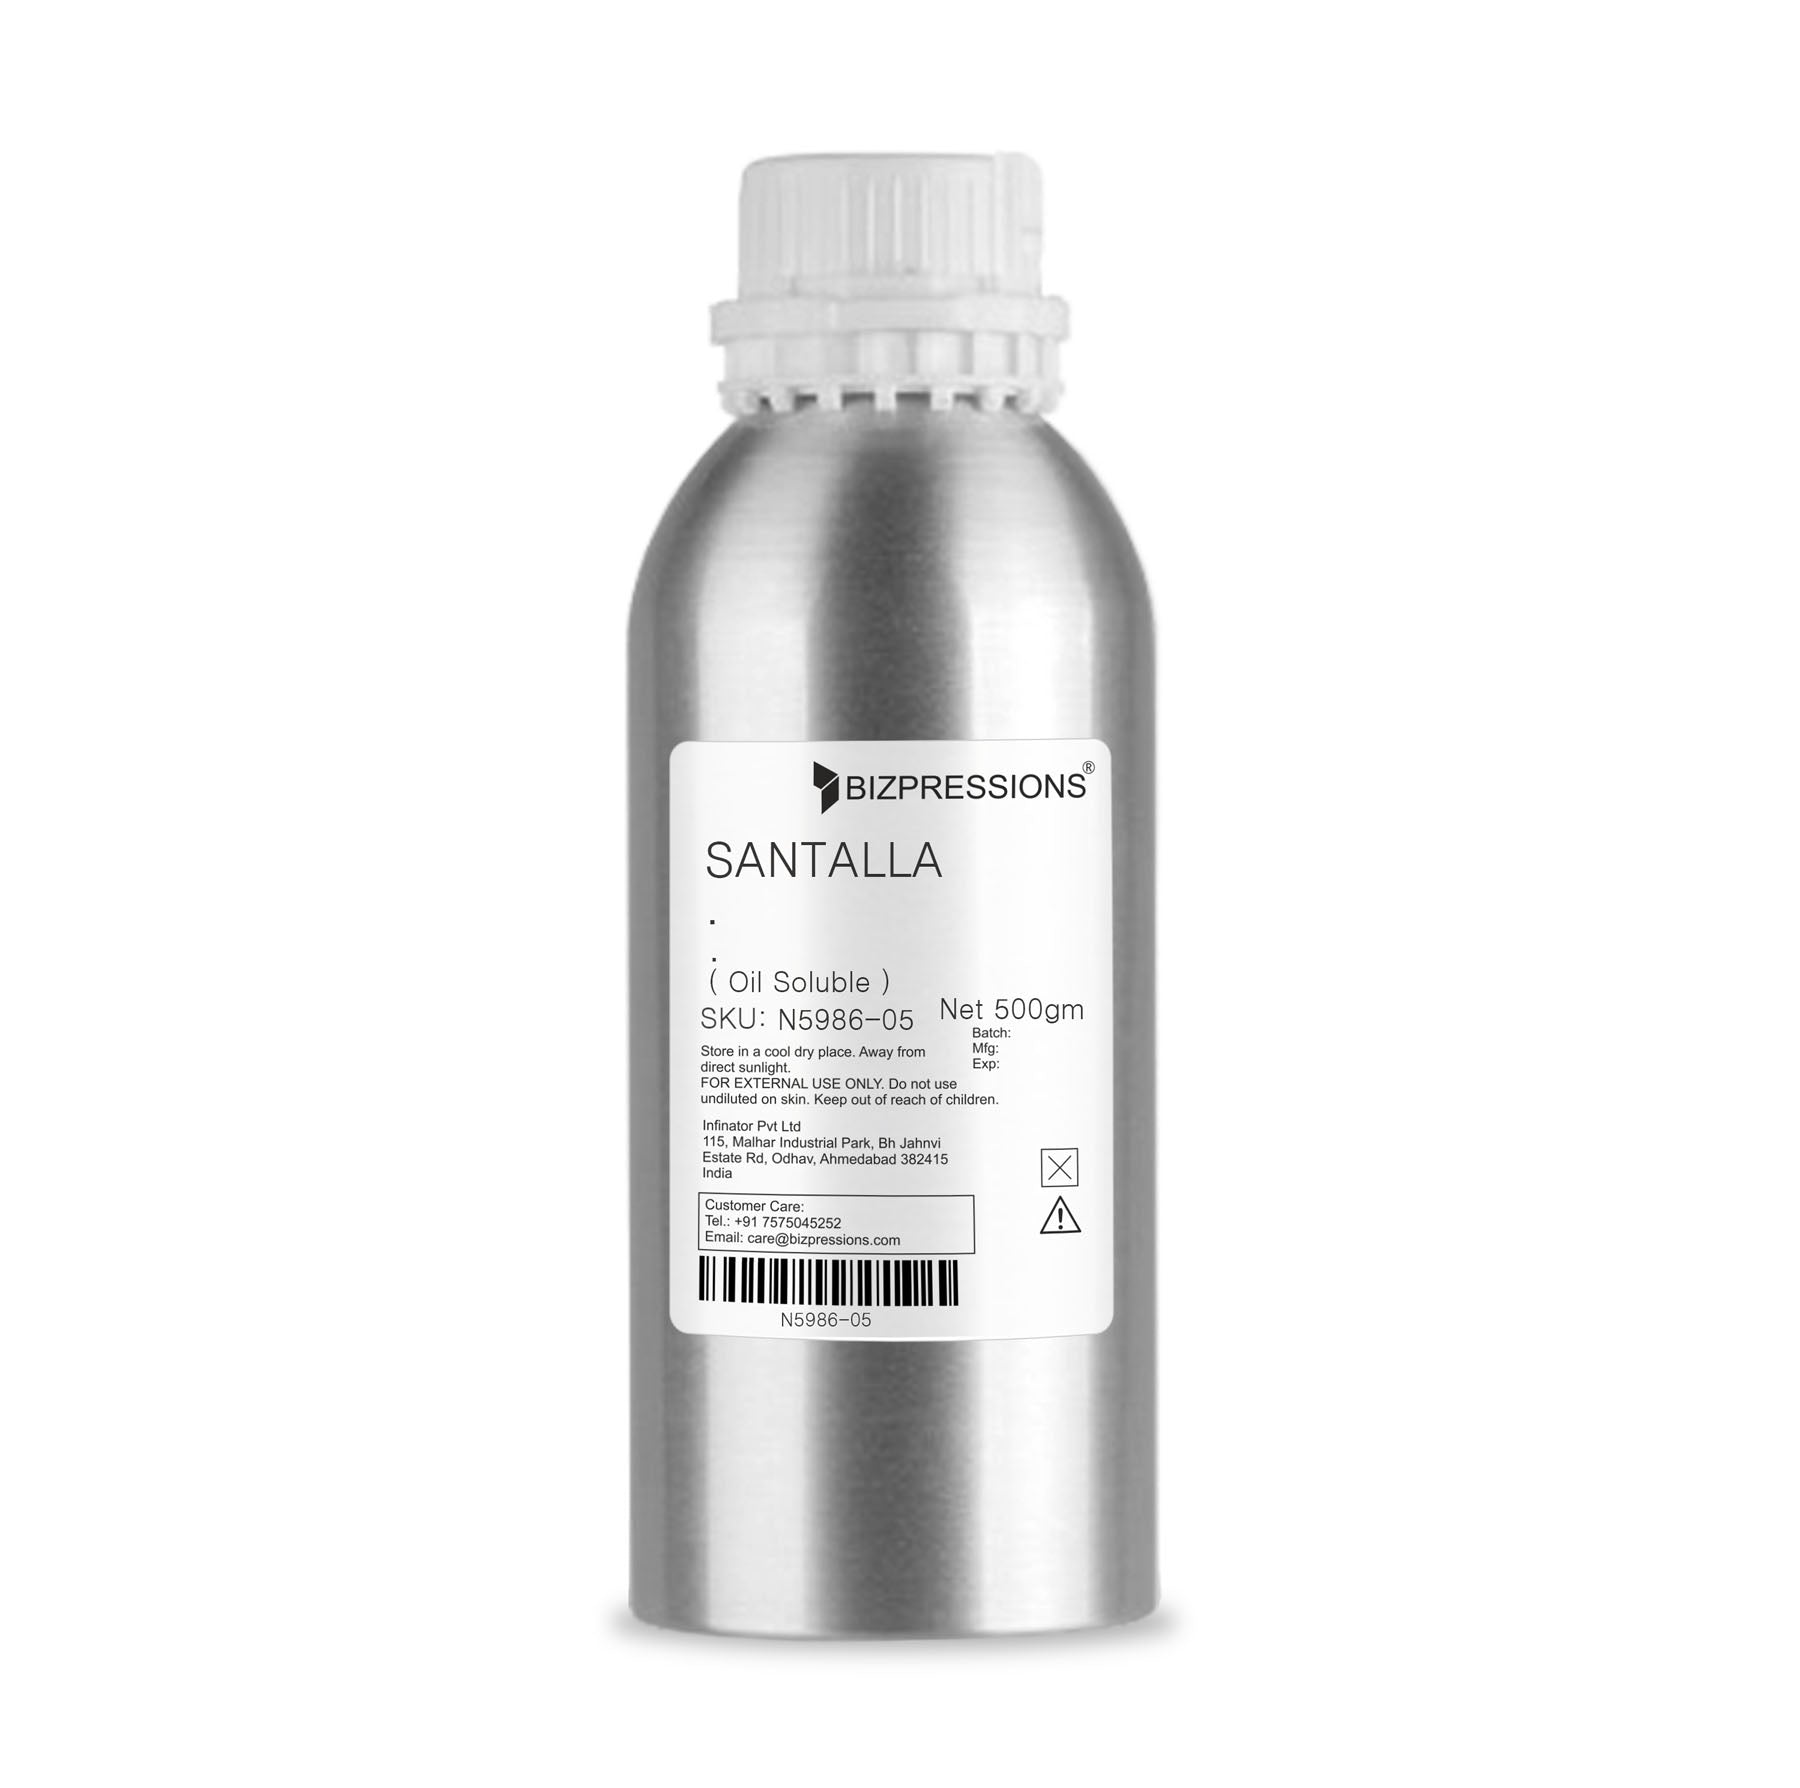 SANTALLA - Fragrance ( Oil Soluble ) - 500 gm